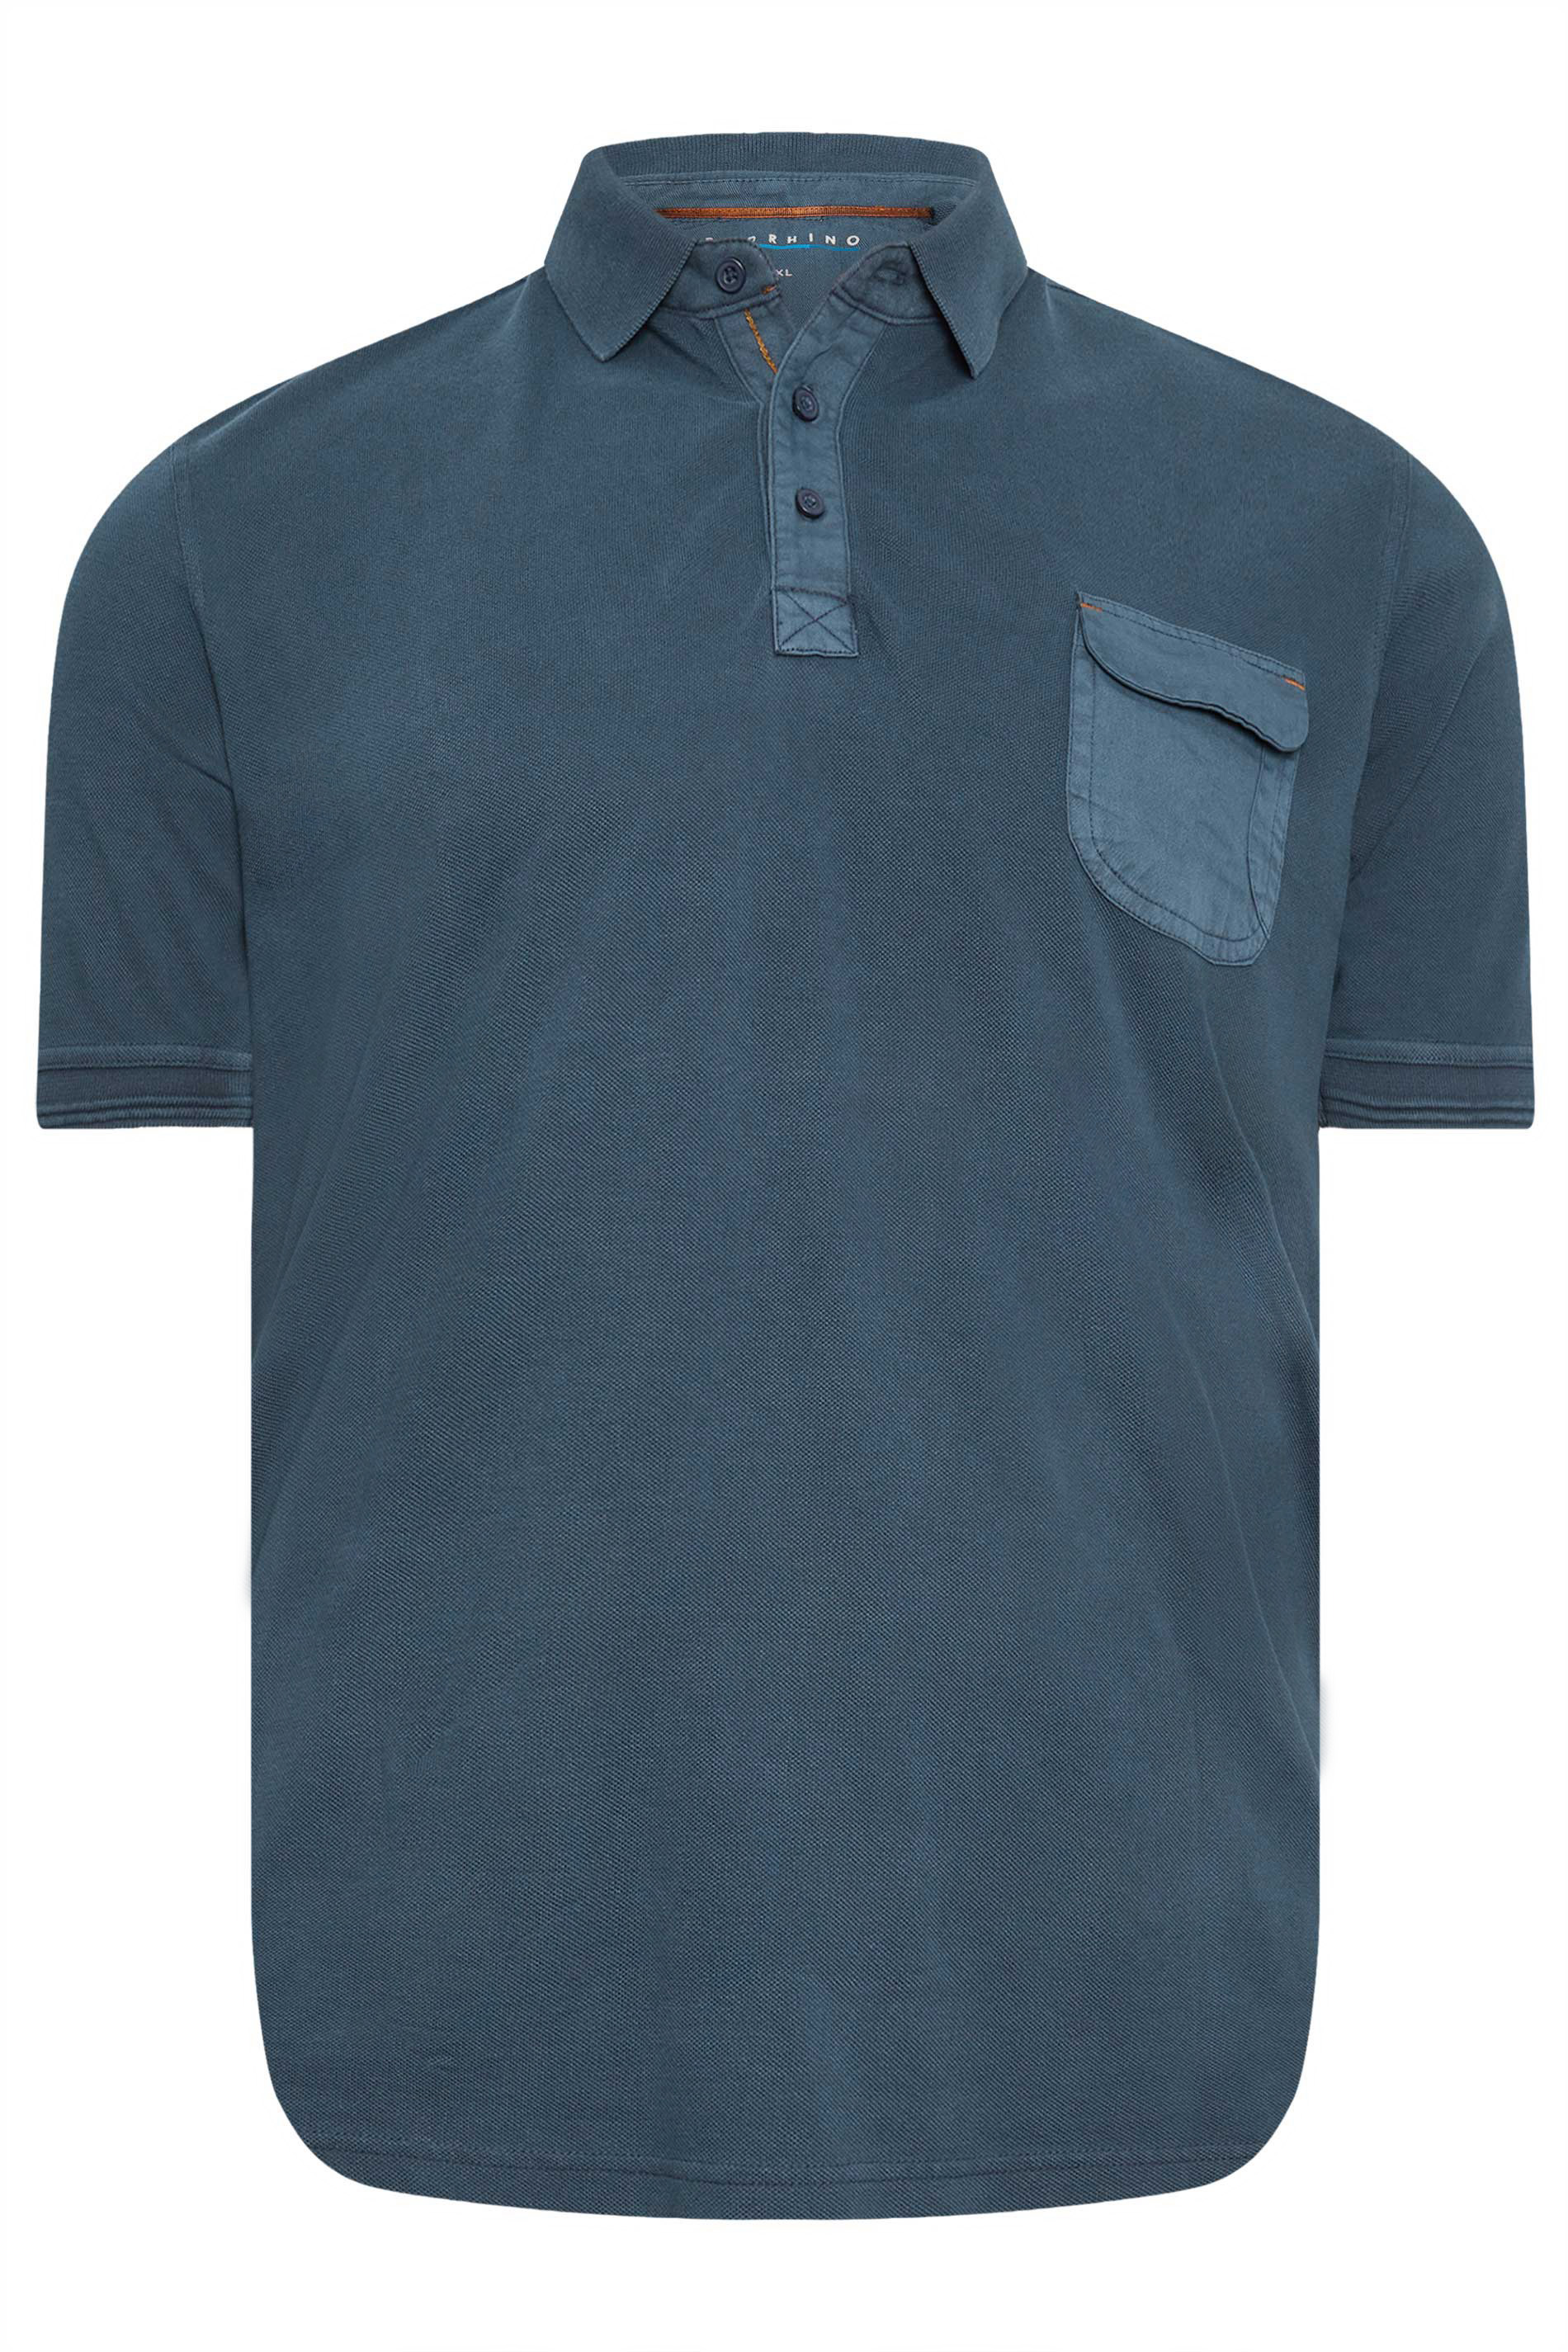 BadRhino Big & Tall Navy Pocket Polo Shirt | BadRhino 3